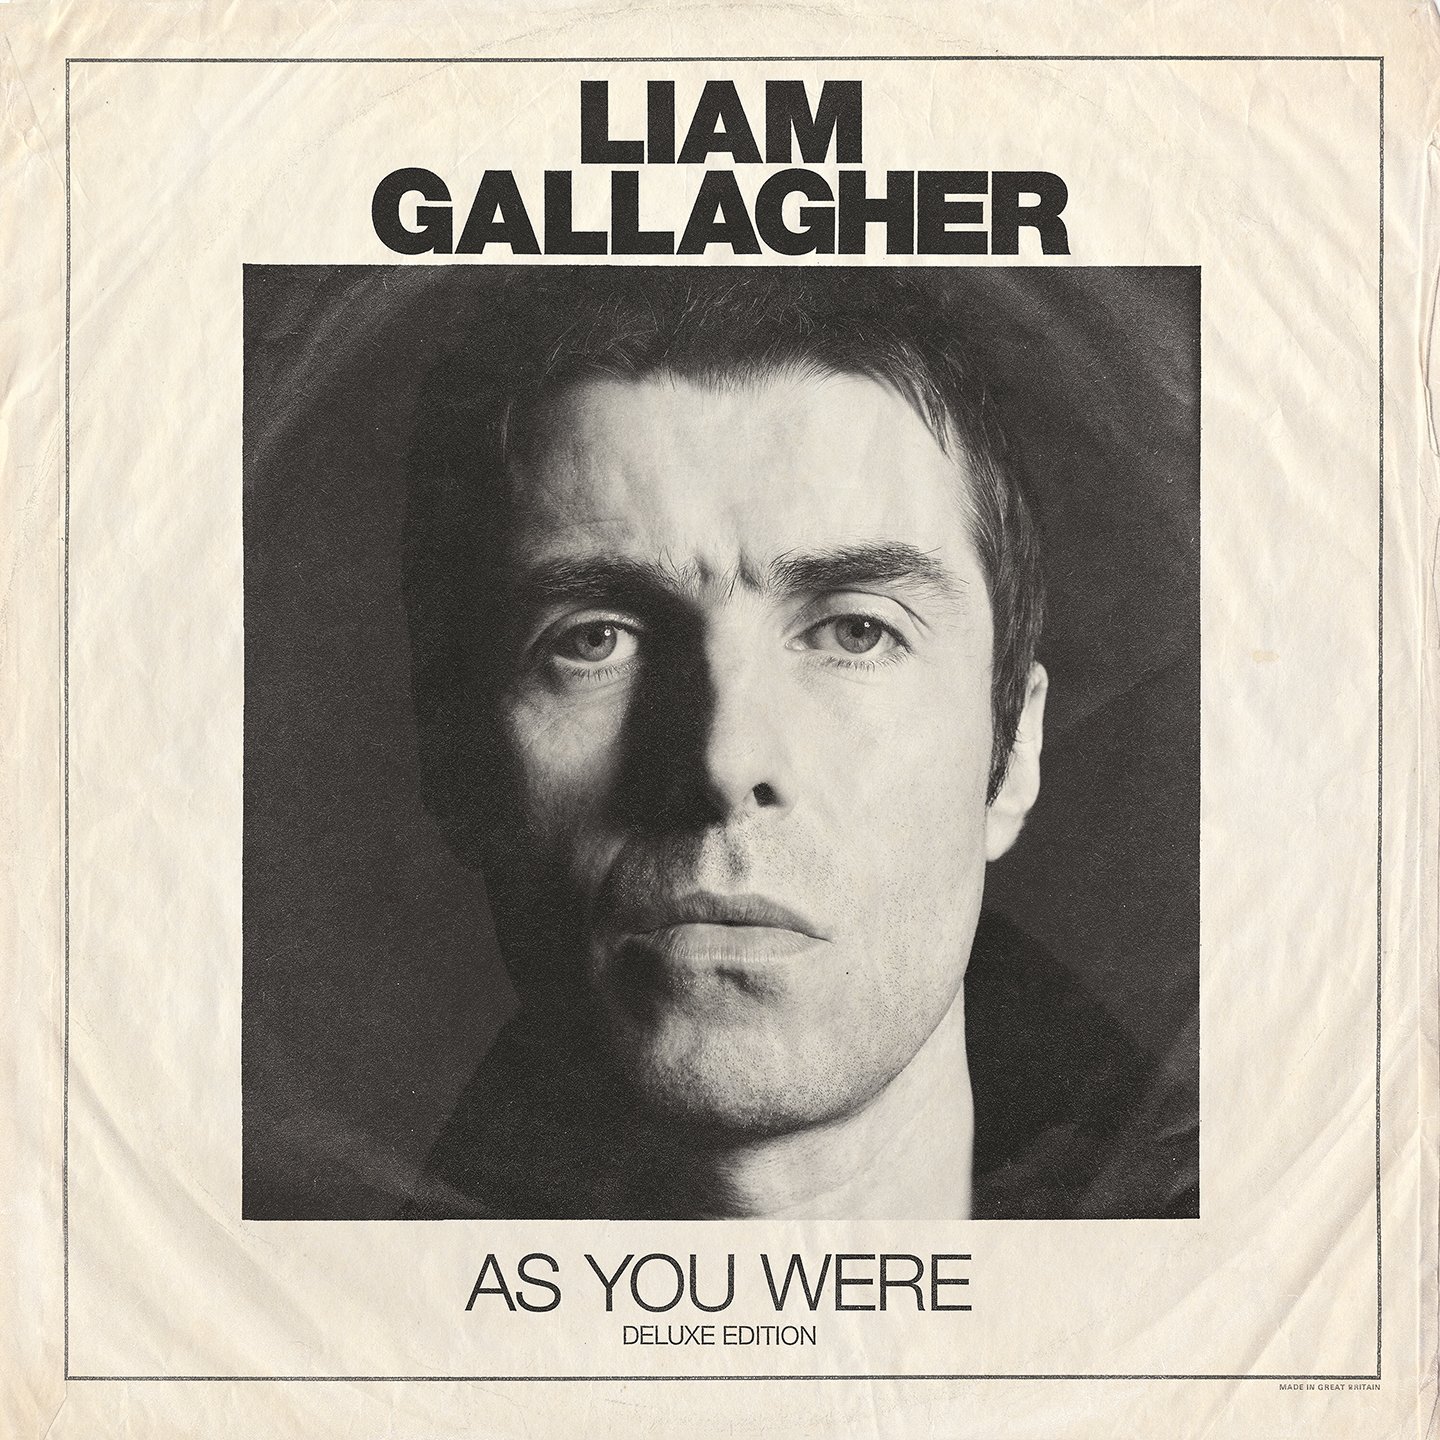 Liam Gallagher - As you were album cover